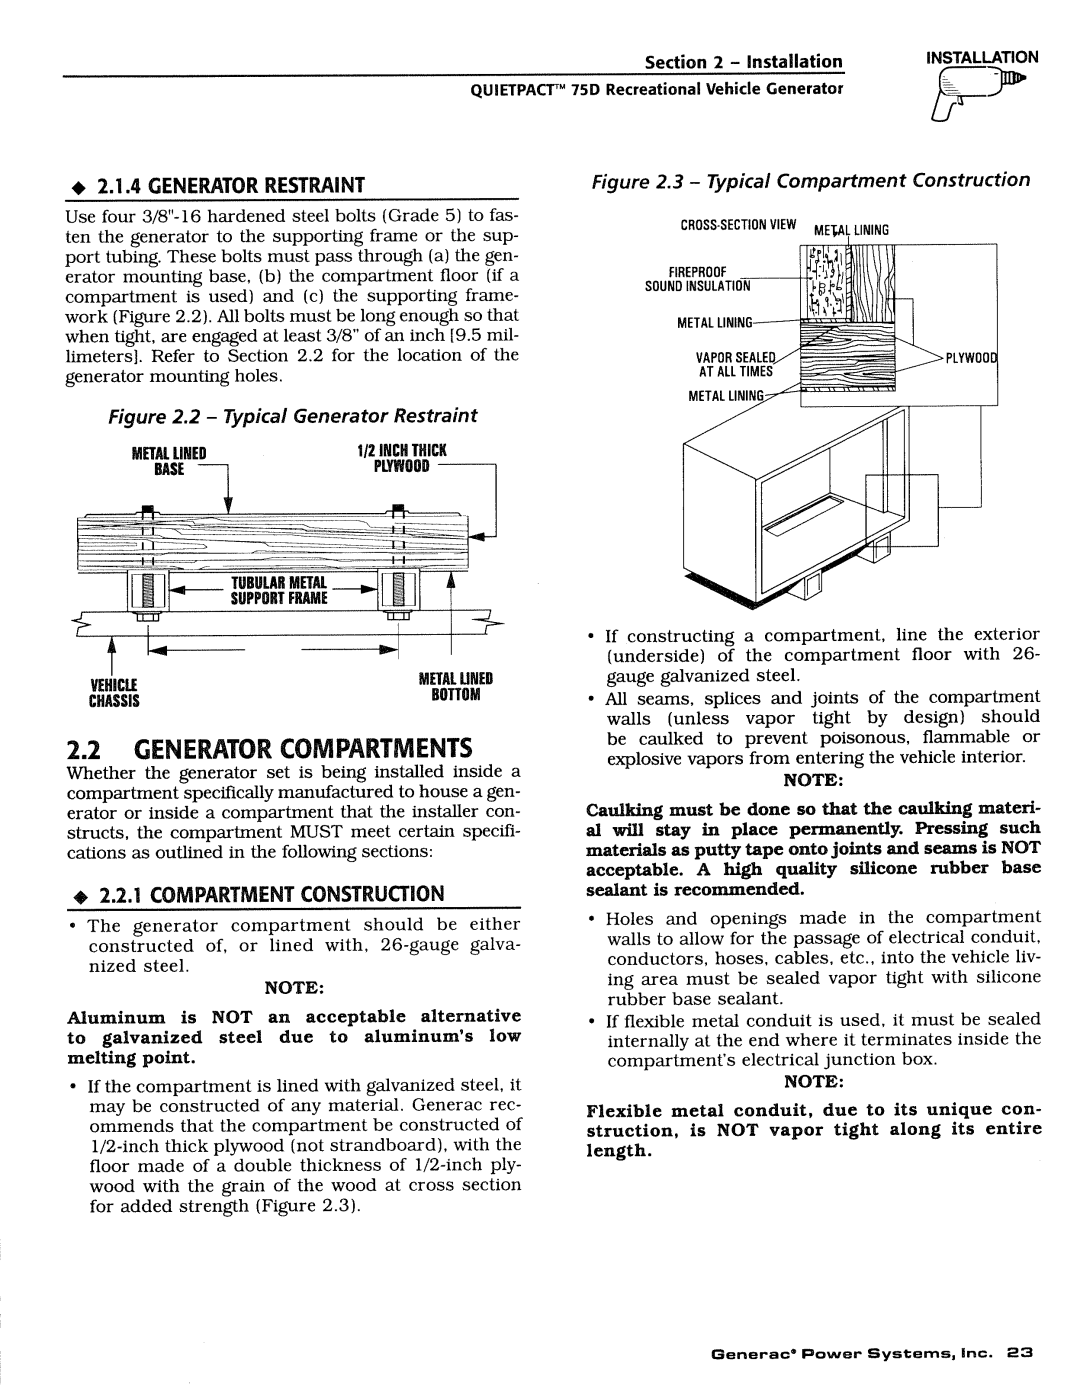 Generac Power Systems 4270-0 manual 